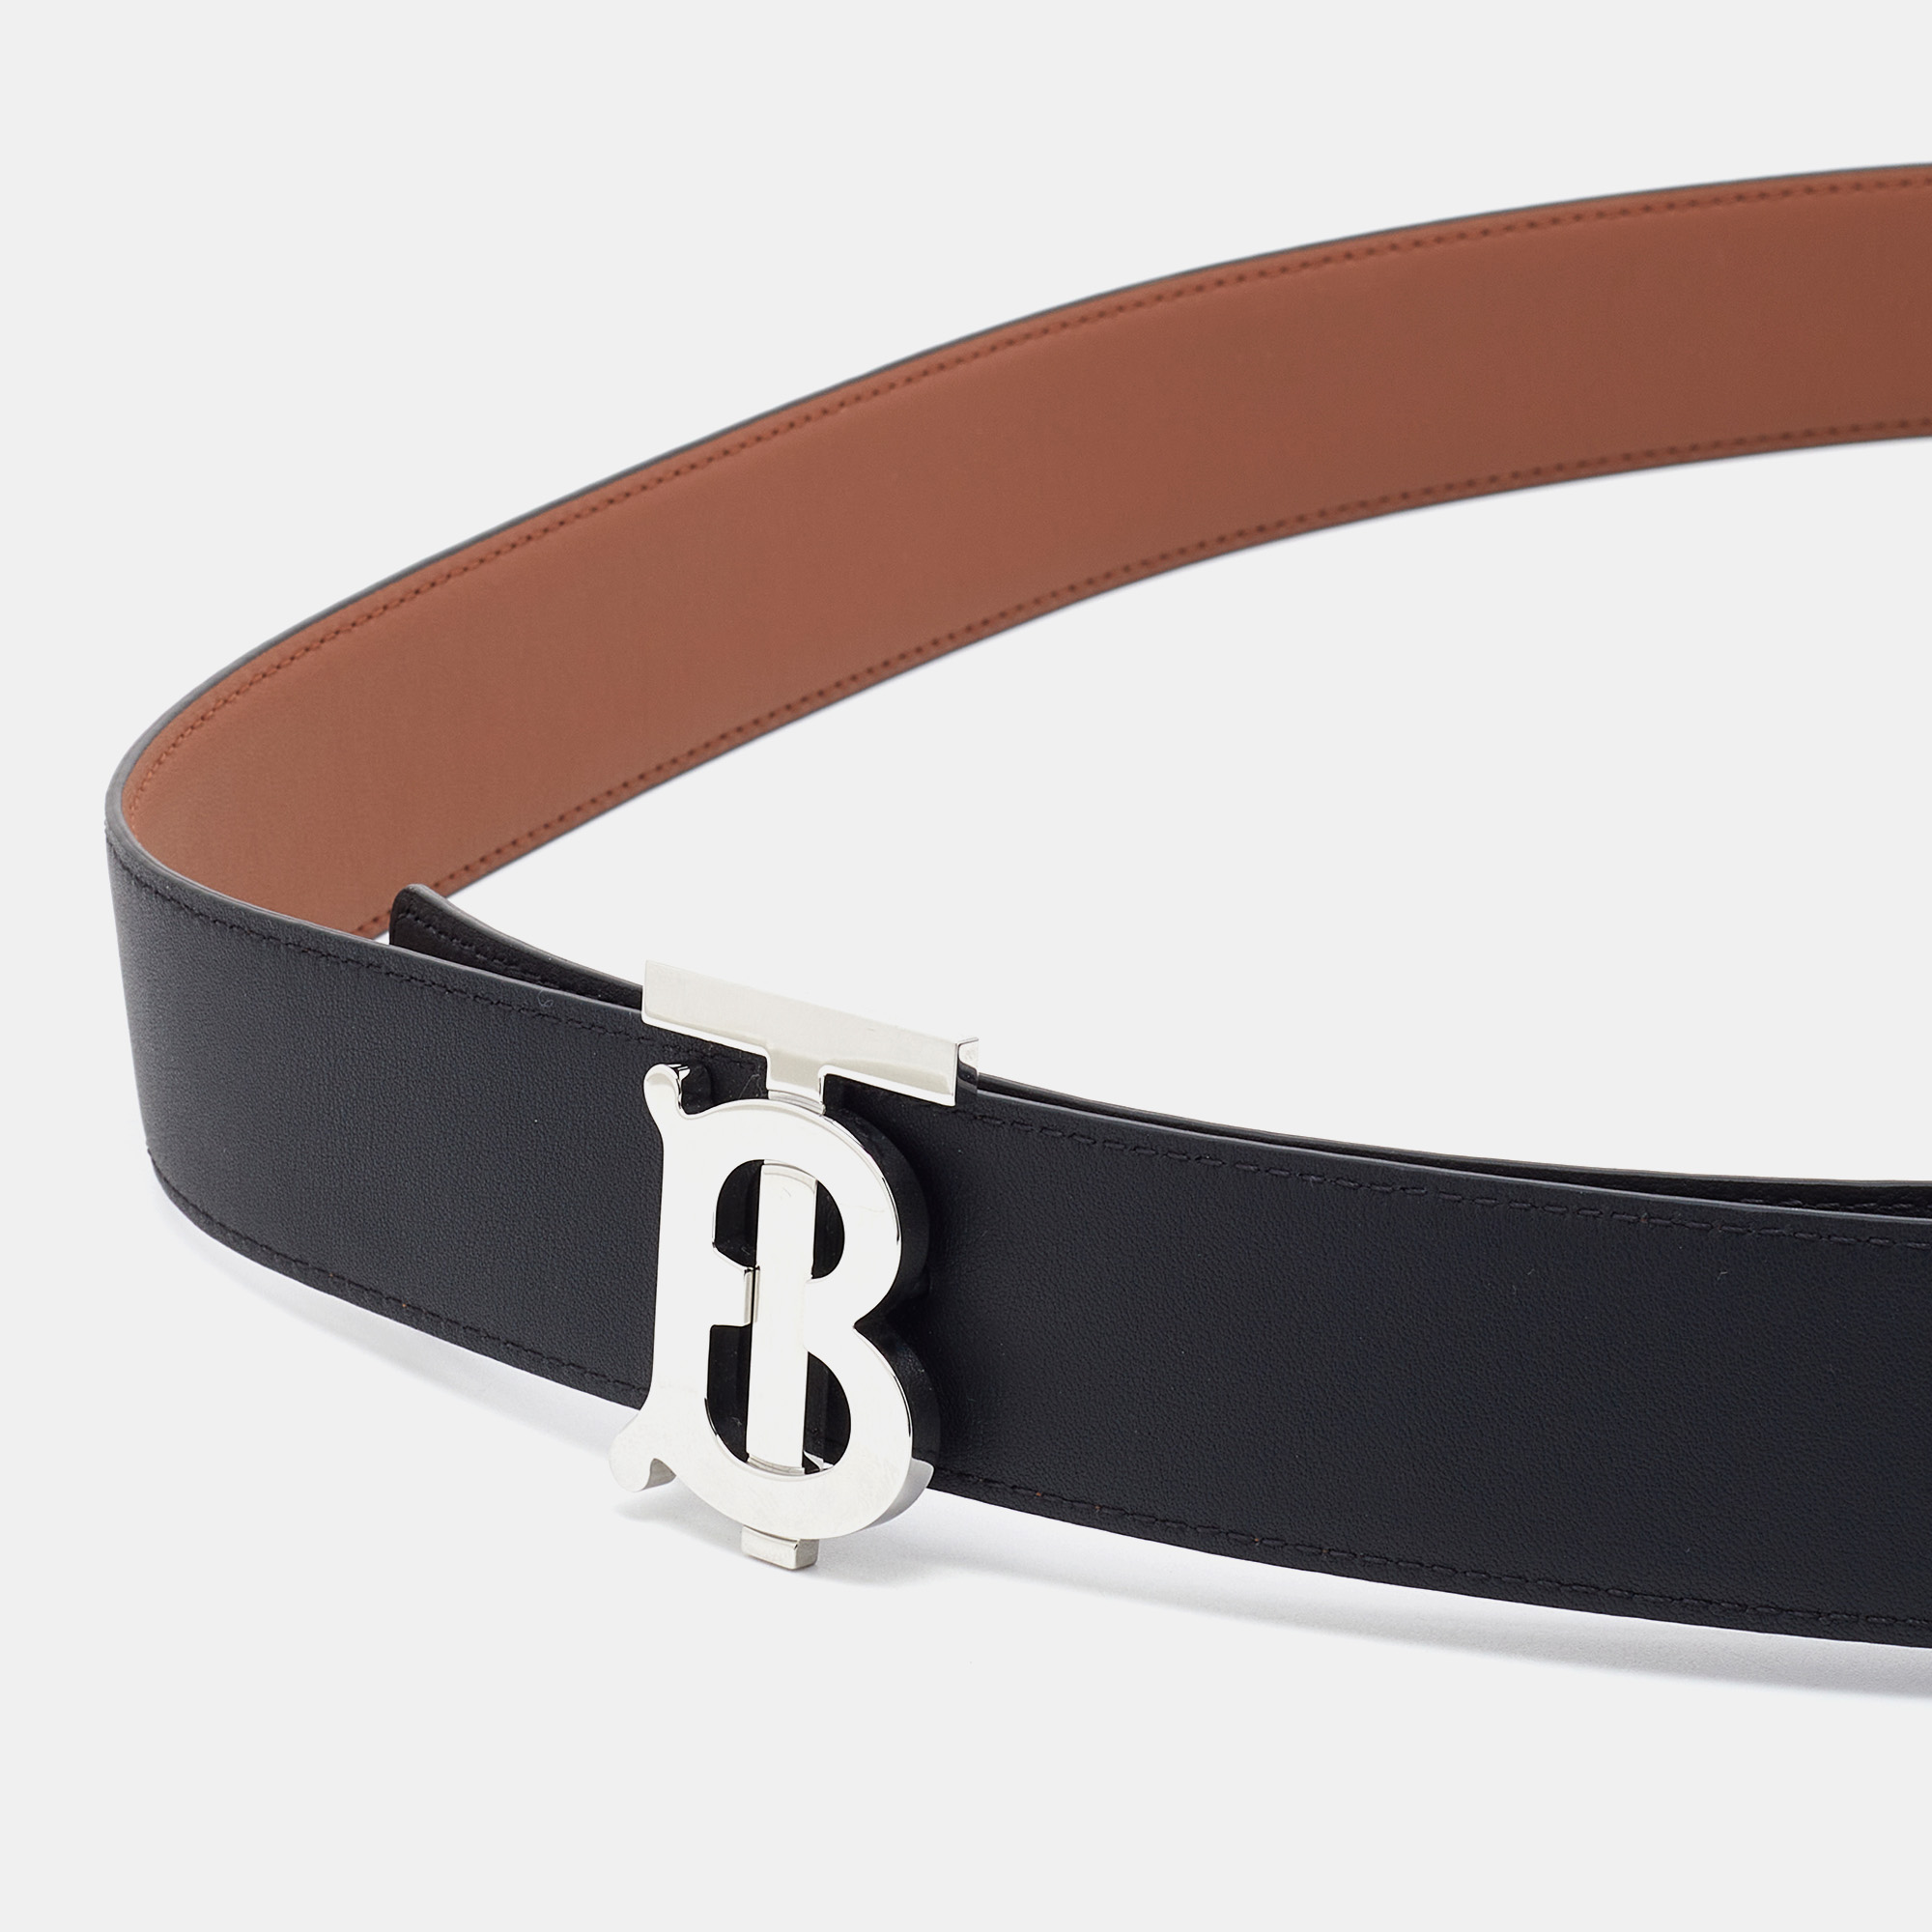 

Burberry Black/Brown Leather Reversible Monogram Motif Buckle Belt